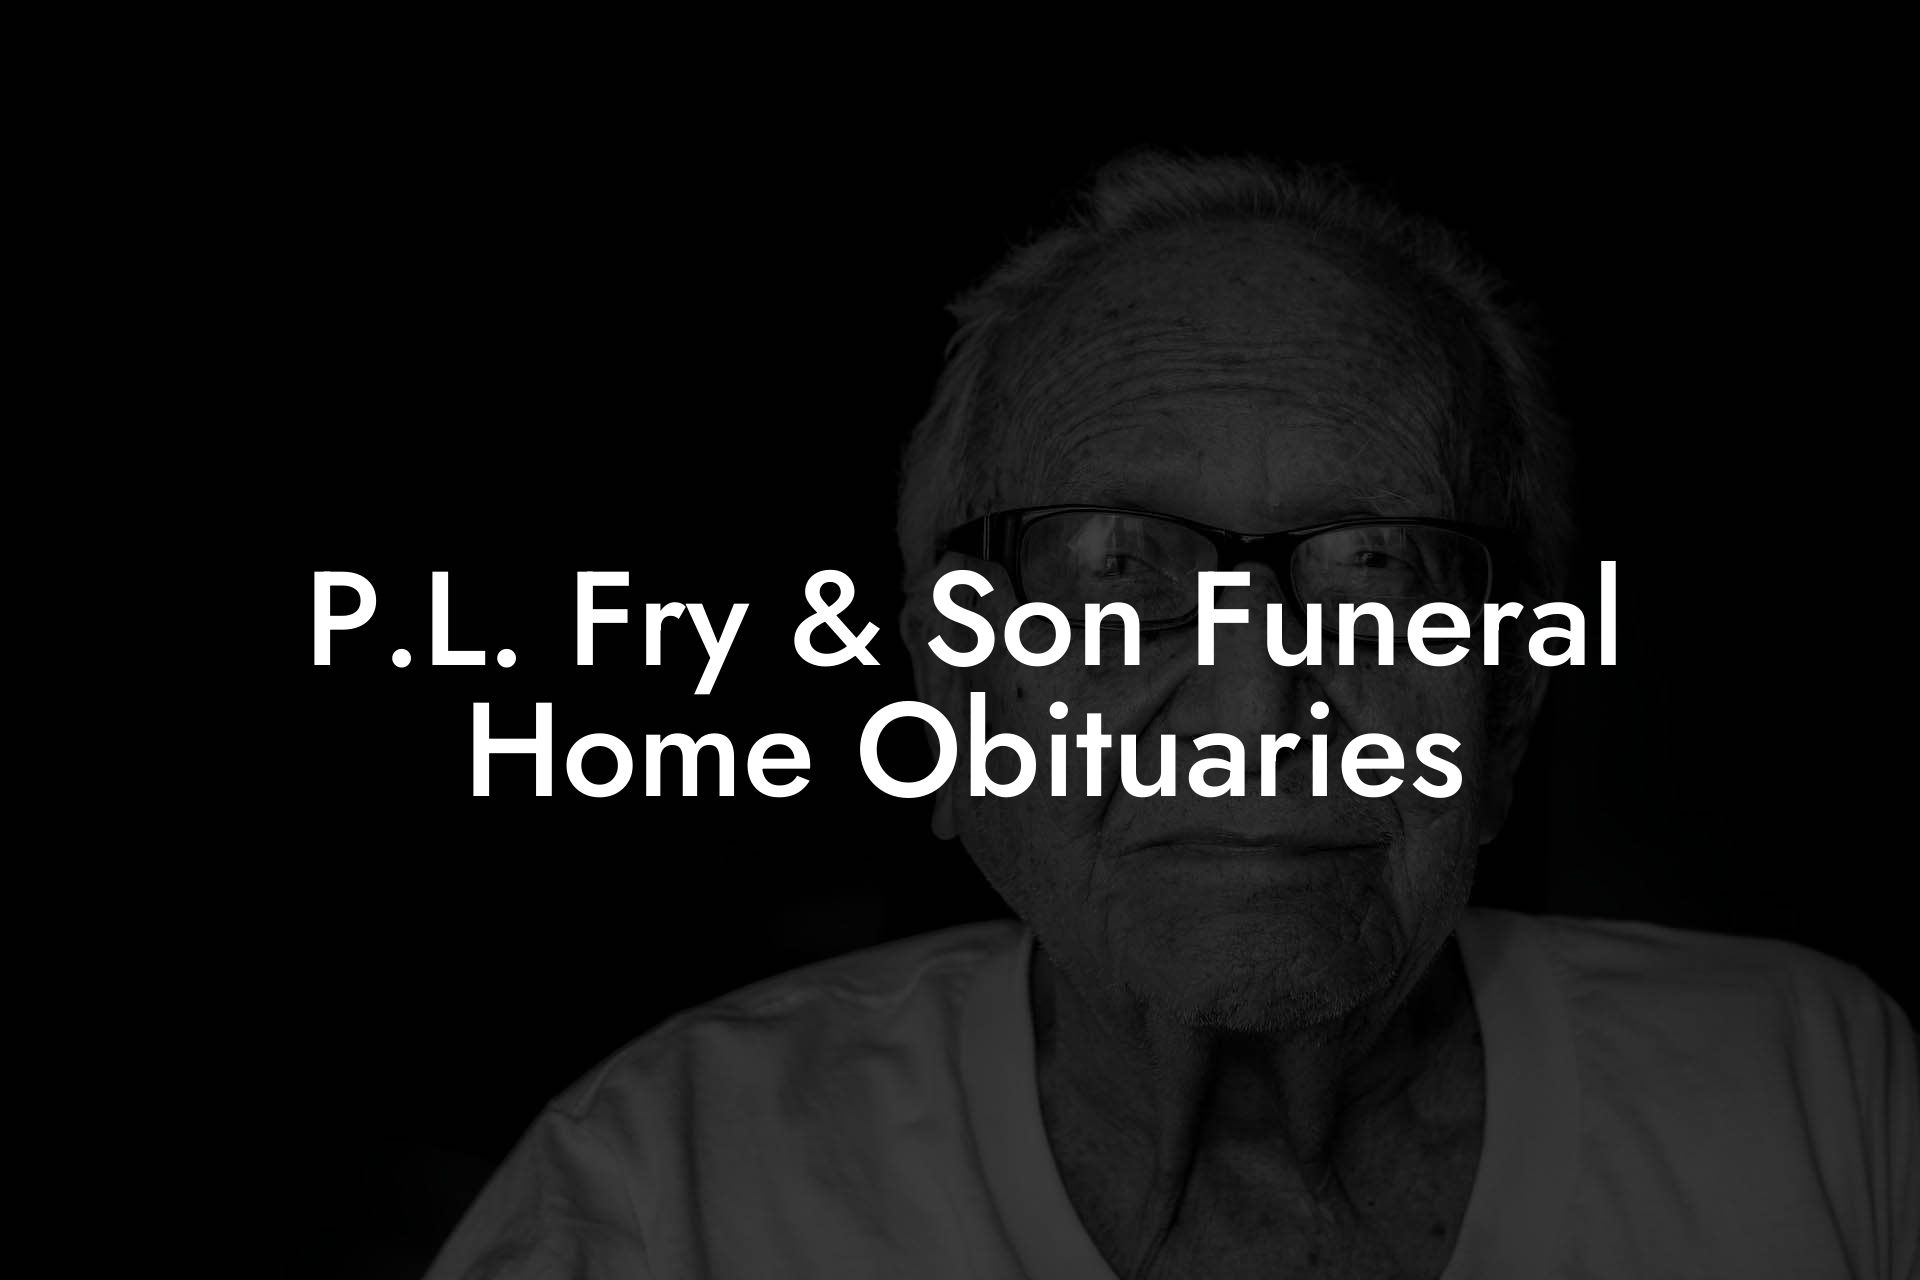 P.L. Fry & Son Funeral Home Obituaries